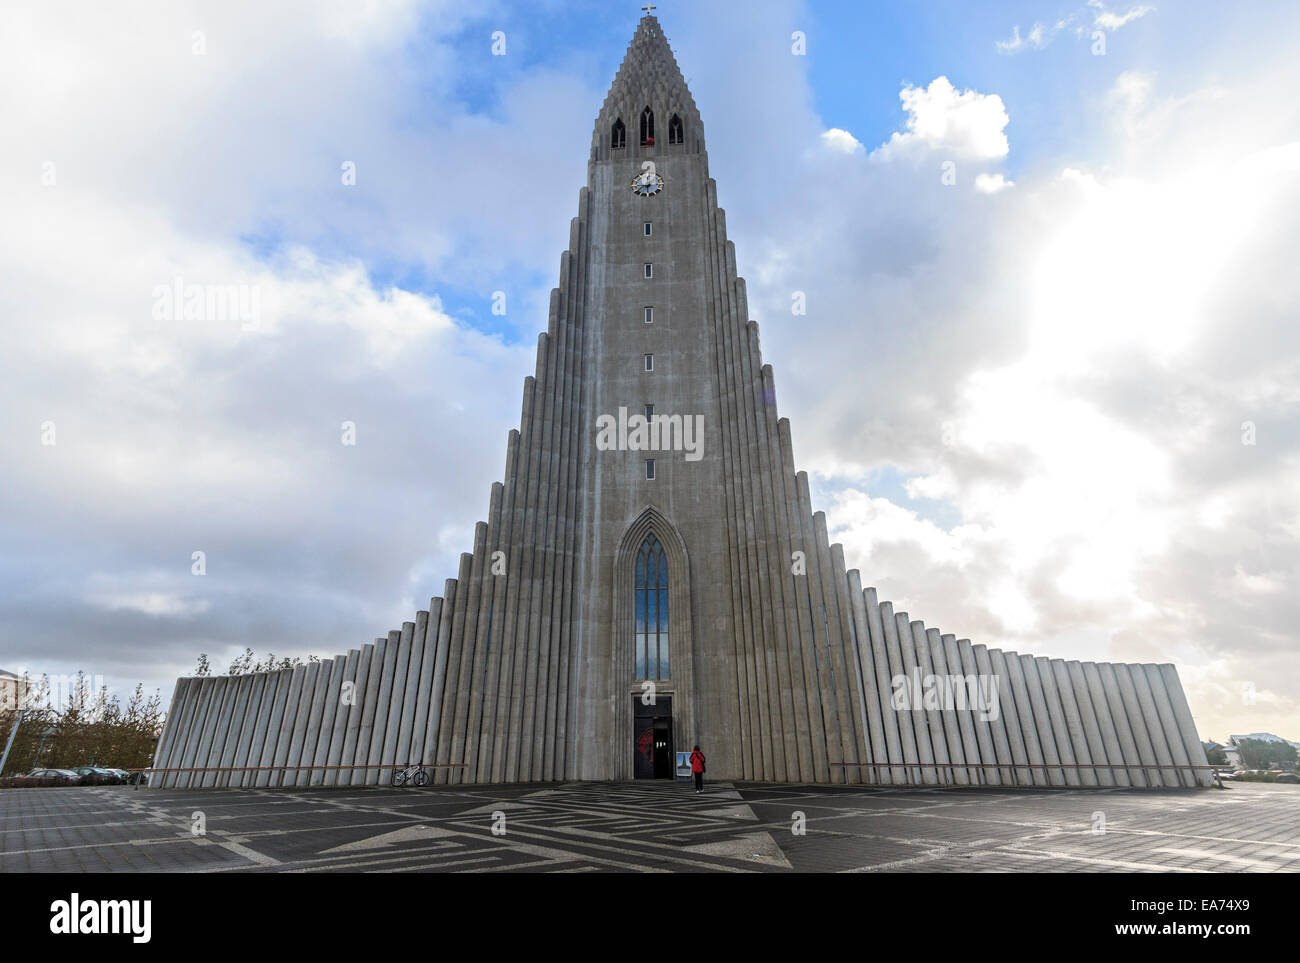 Hallgrímskirkja, an iconic landmark Lutheran parish church in Reykjavík, Iceland. Stock Photo